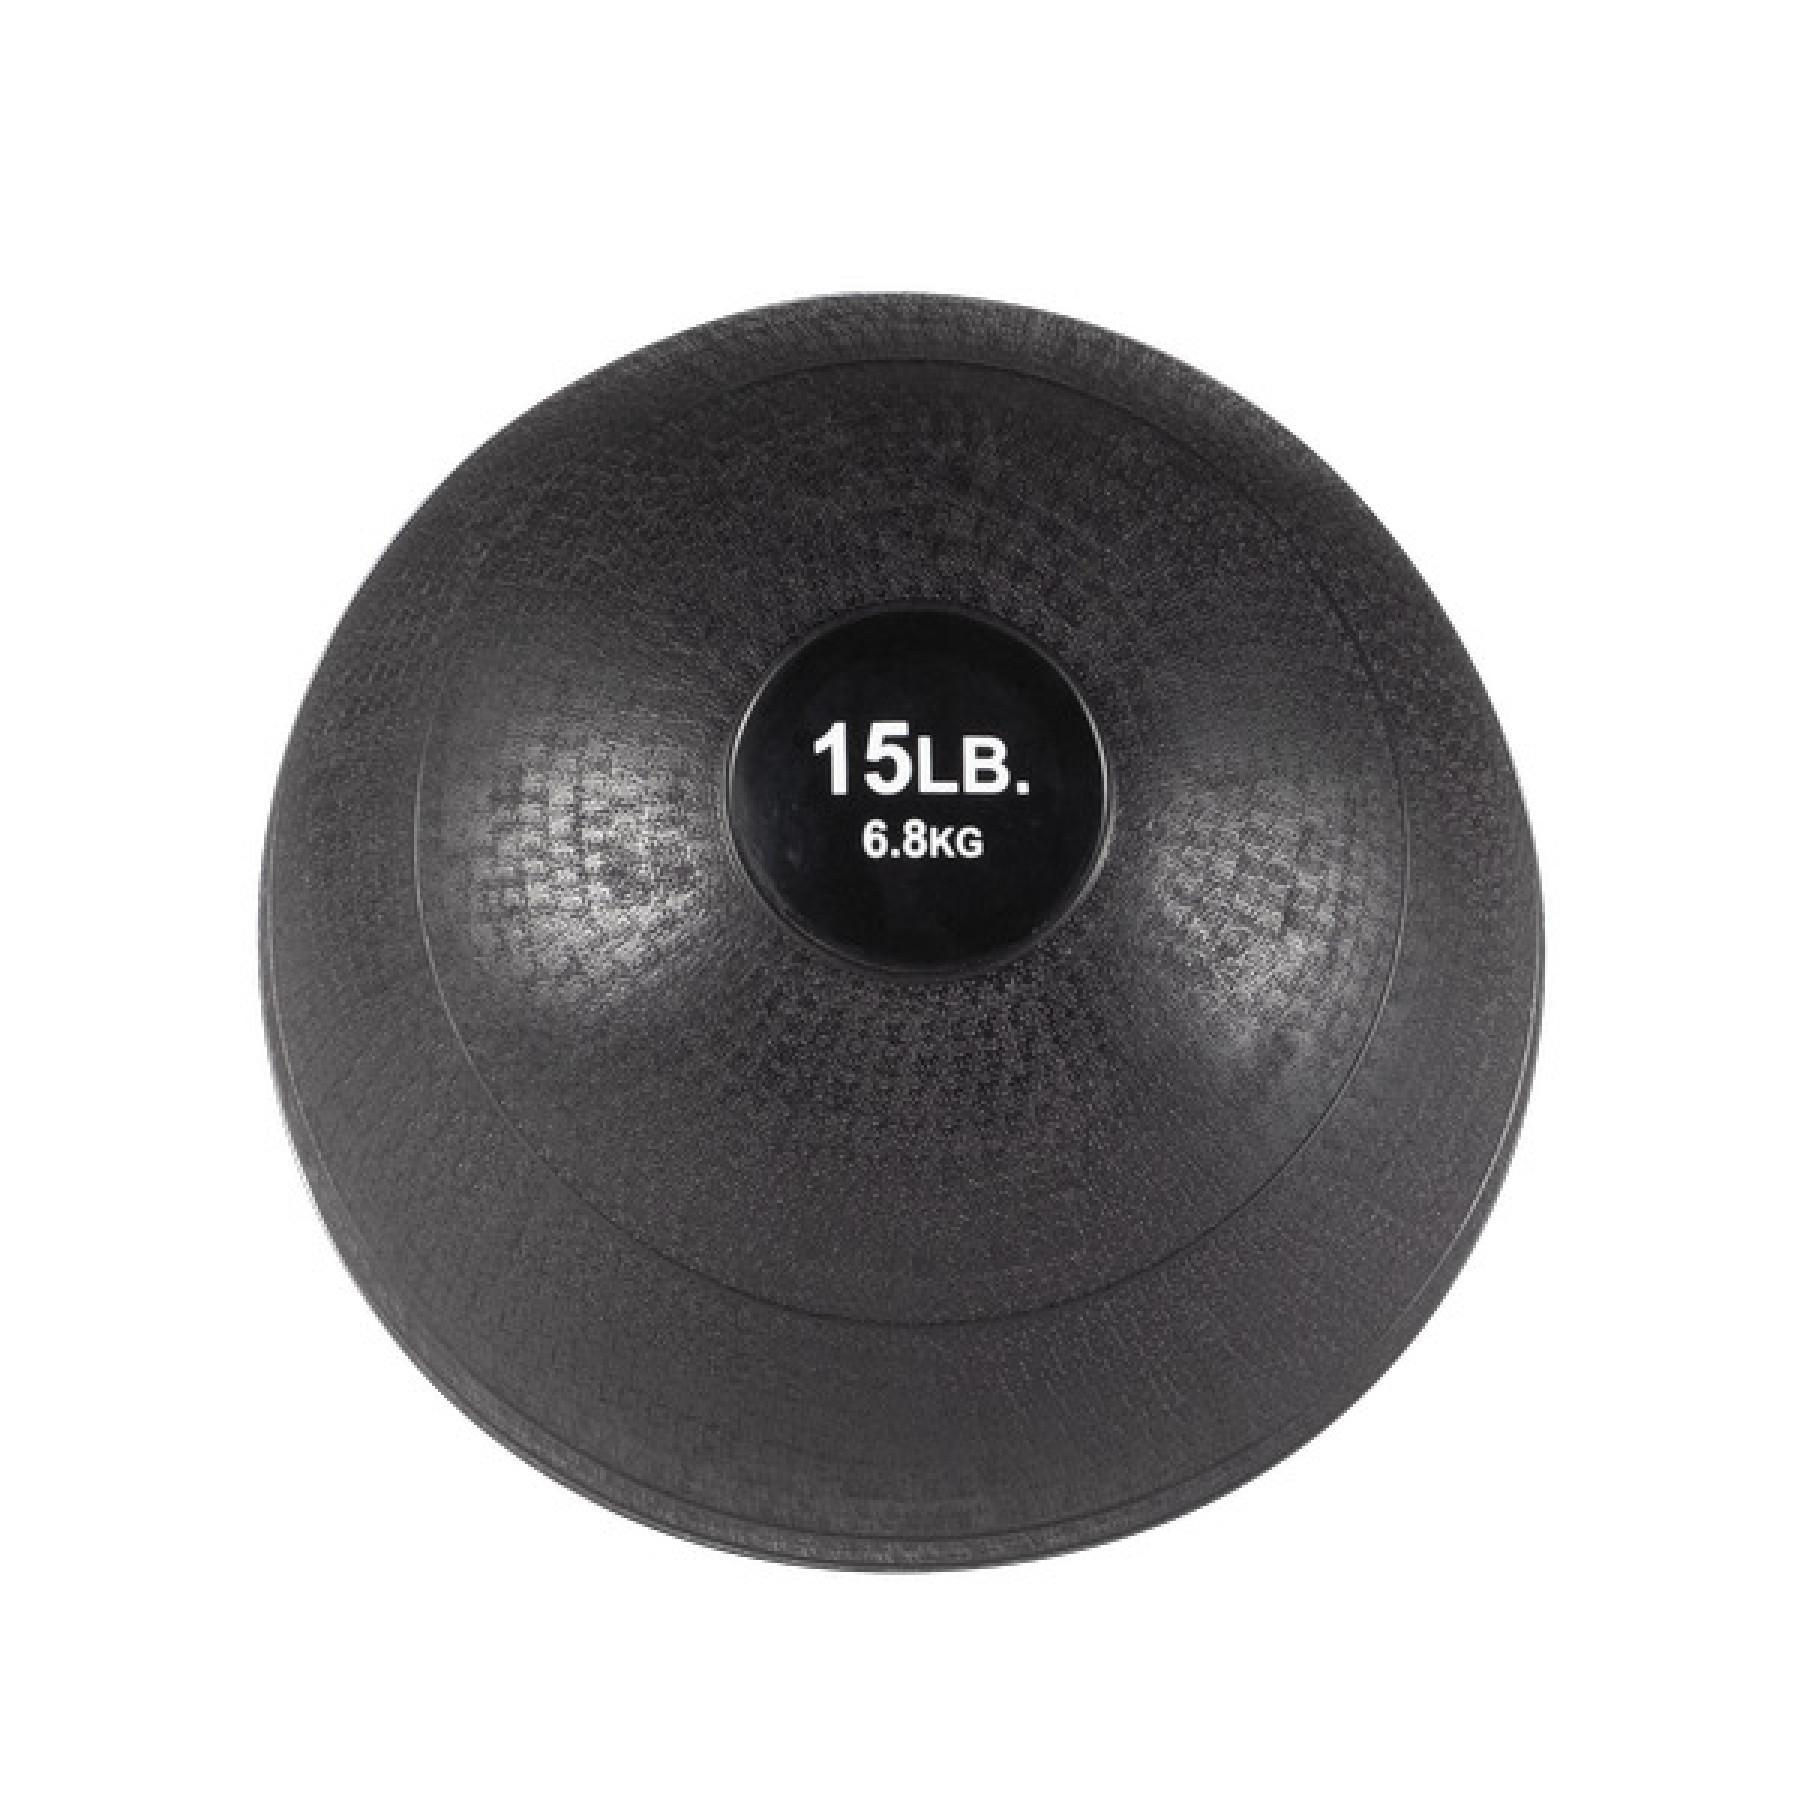 Esfera Slam 15 lb - 6,8 kg Body Solid